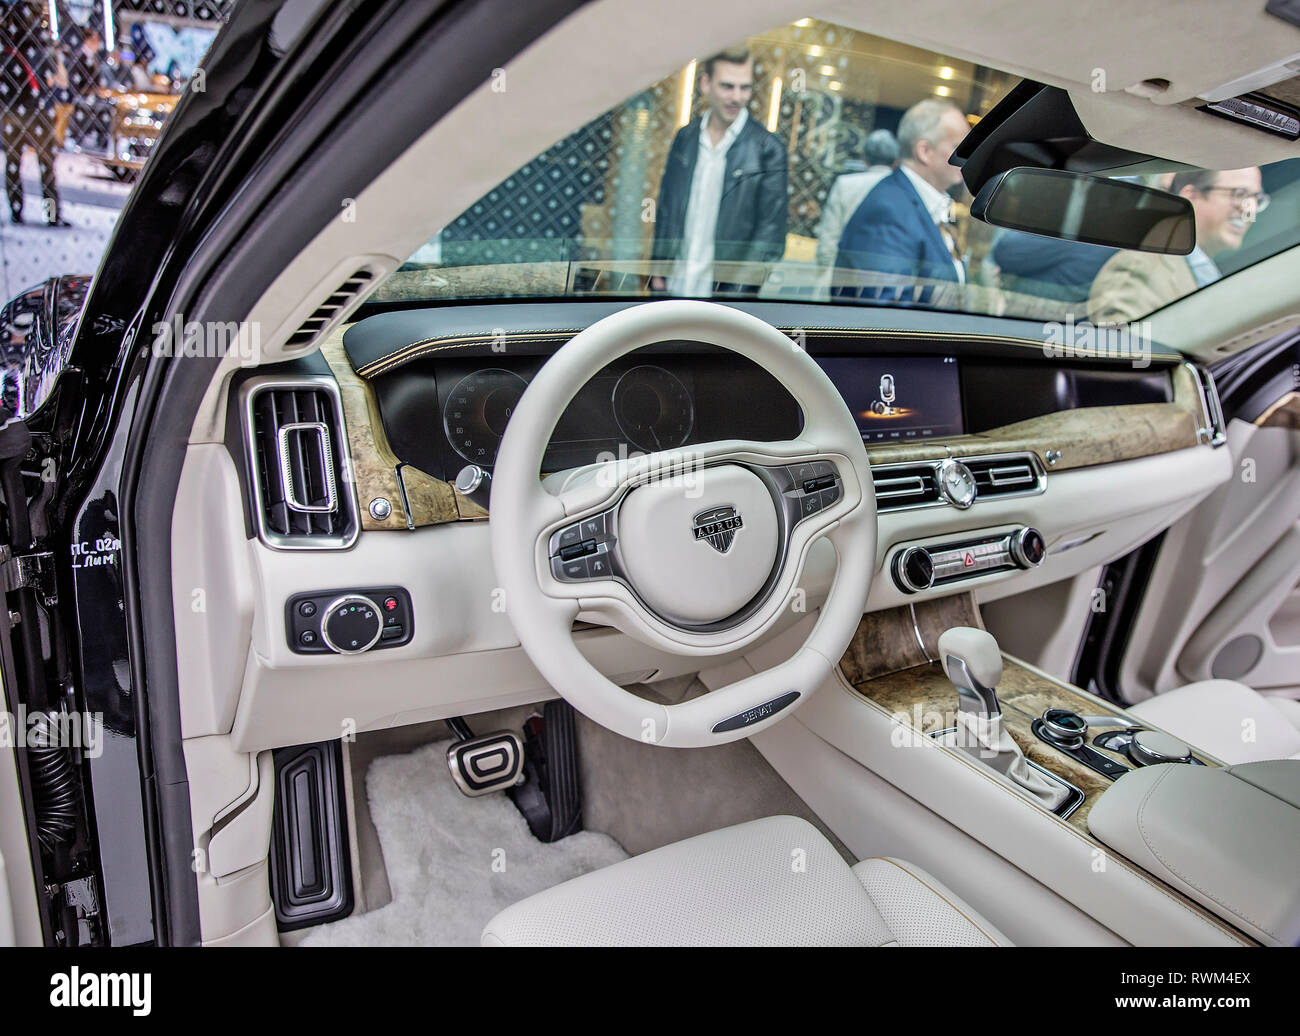 https://c8.alamy.com/comp/RWM4EX/aurus-senat-russian-luxury-limousine-that-carries-also-russian-president-vladimir-putin-was-presented-during-the-2019-geneva-international-motor-sh-RWM4EX.jpg